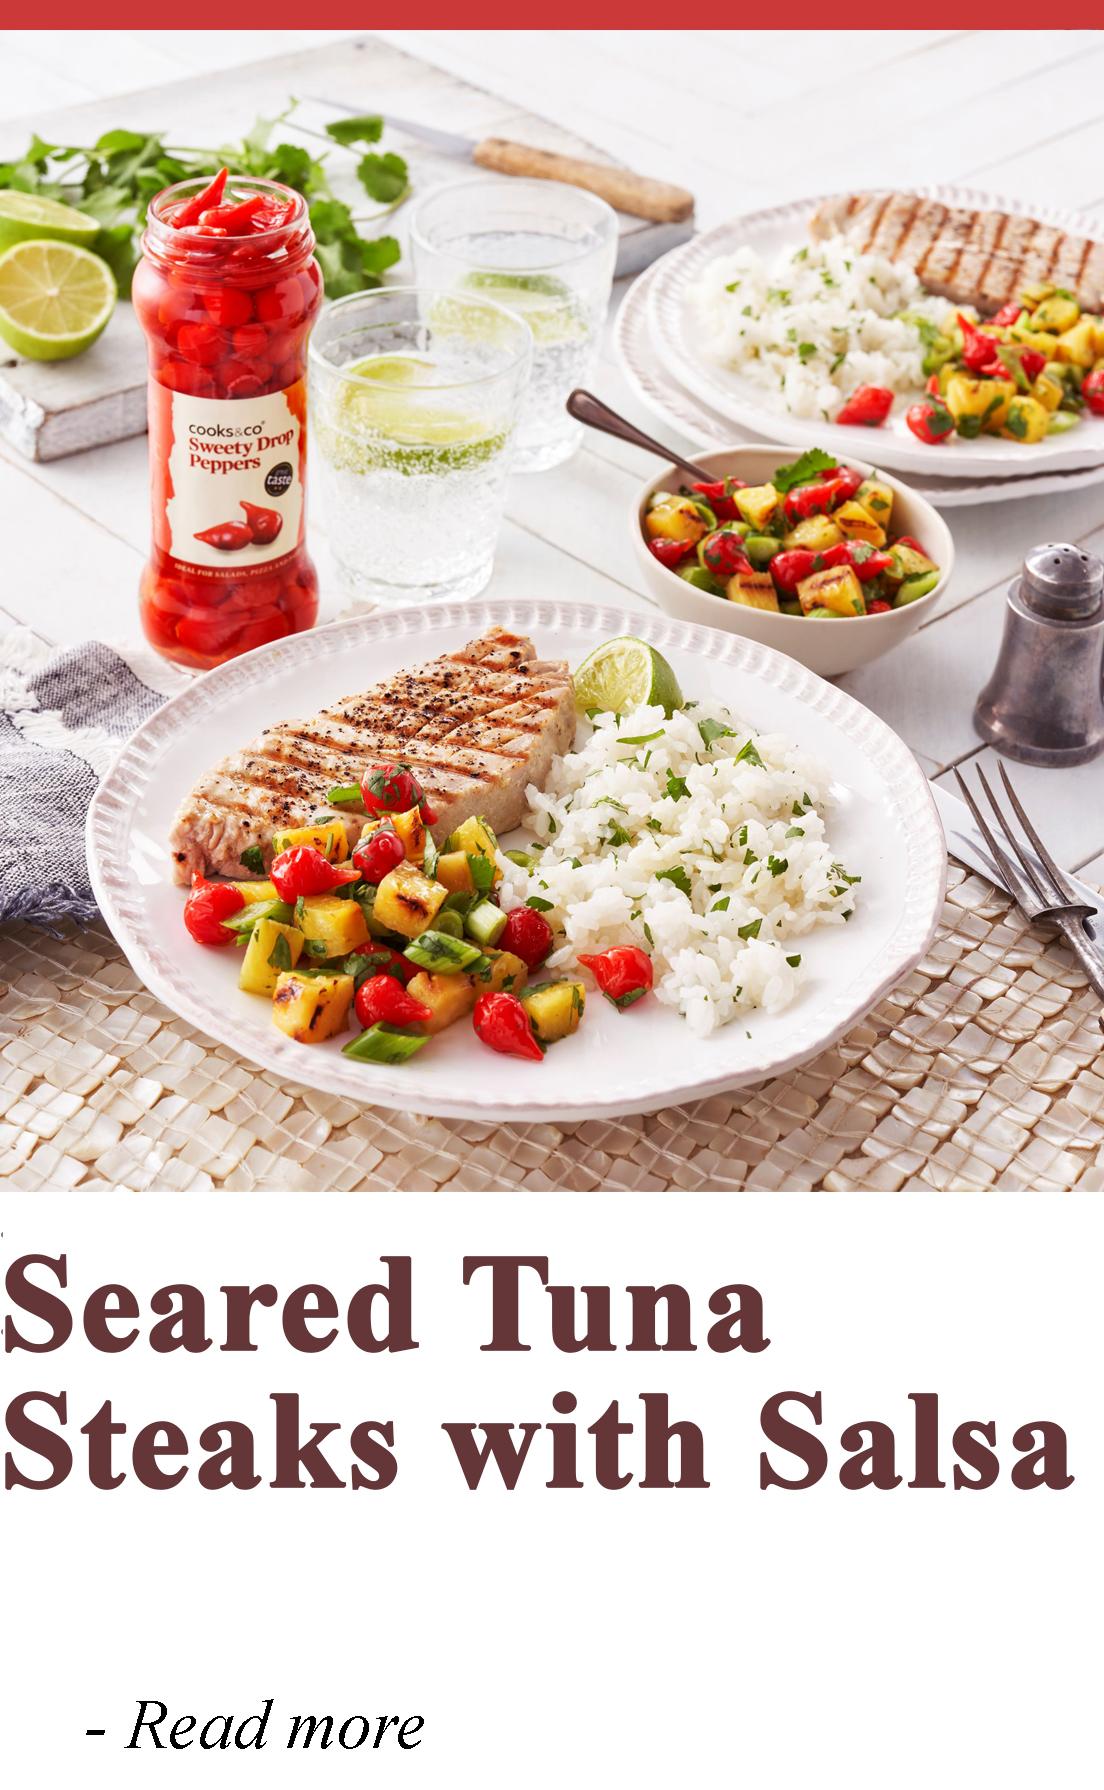 Seared Tuna Recipe cover image.jpg